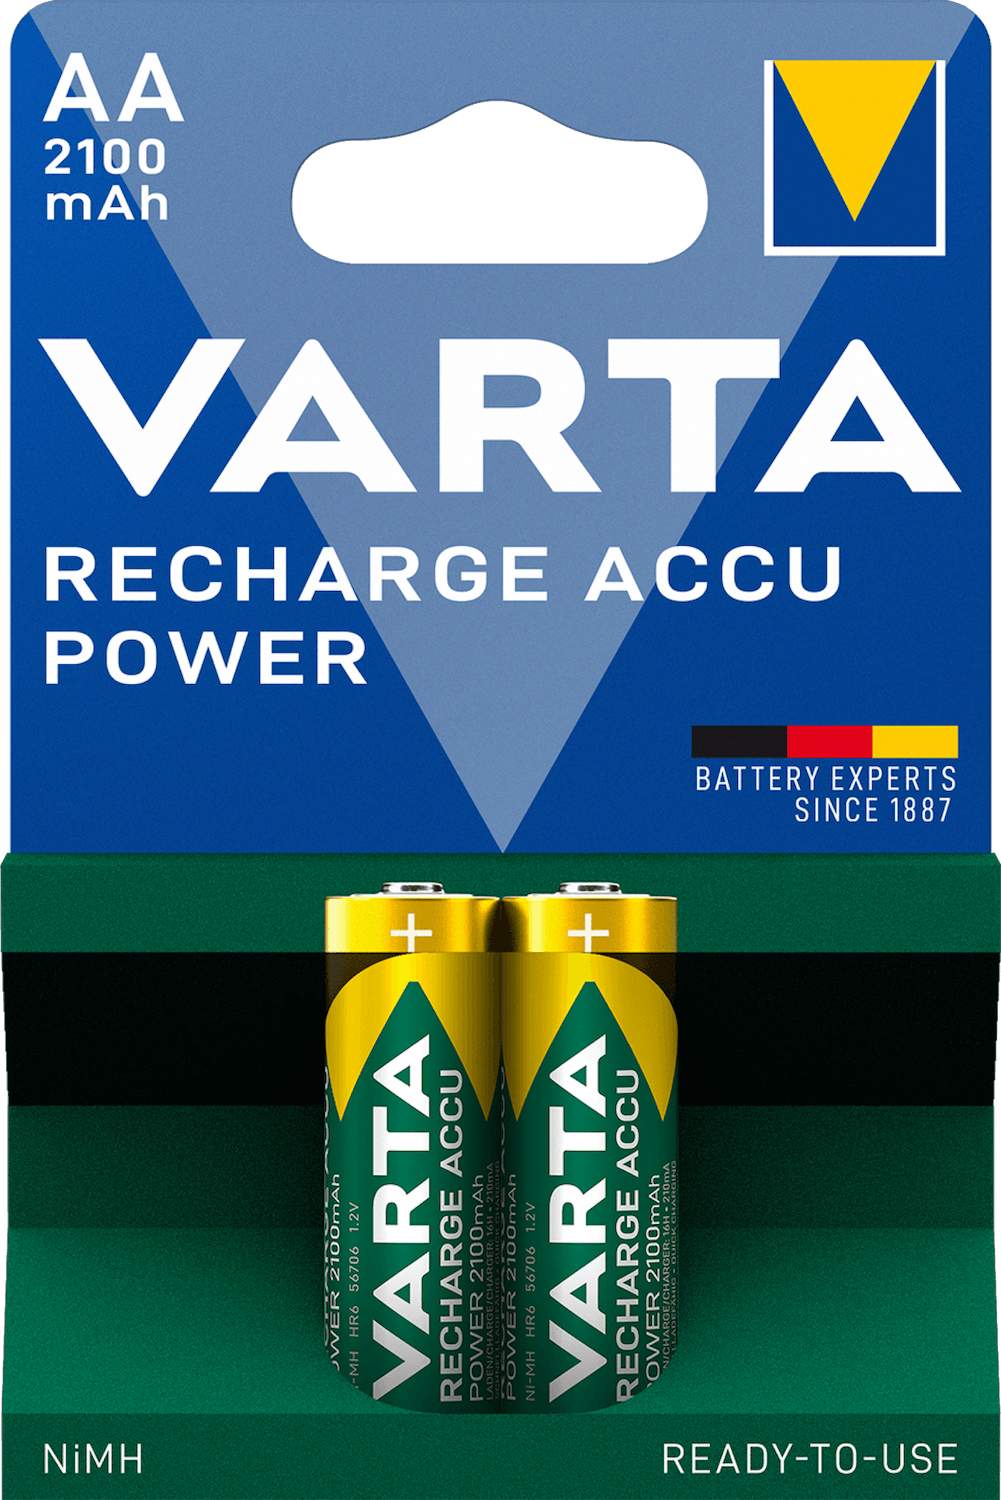 2 Piles Rechargeables AA / HR6 2100mAh Varta Accu Power